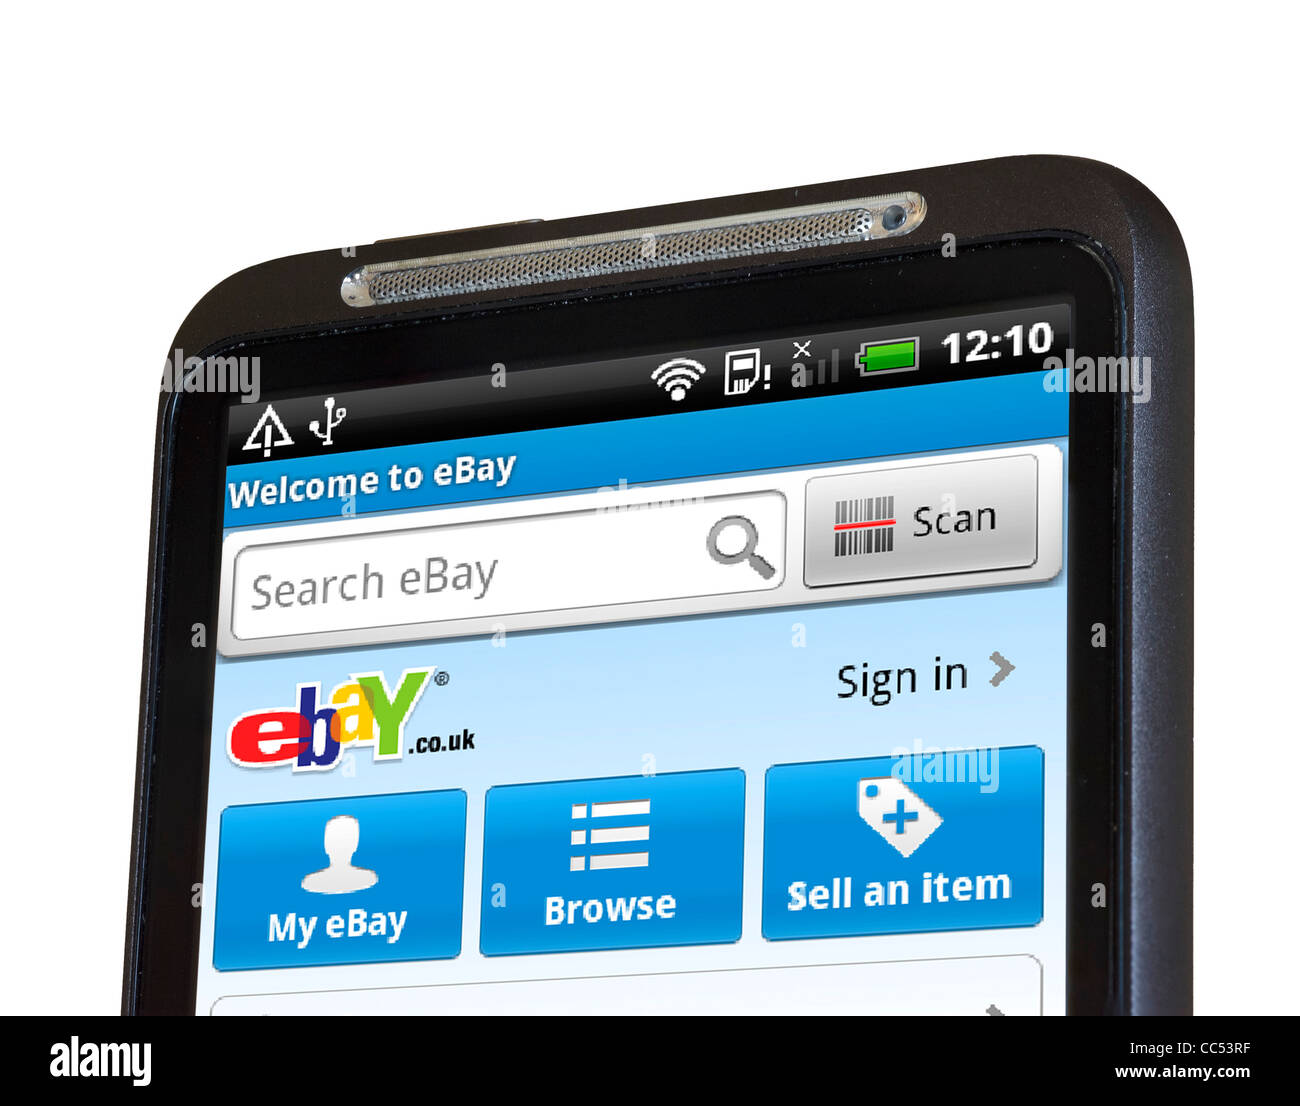 Using the ebay app on an HTC smartphone Stock Photo